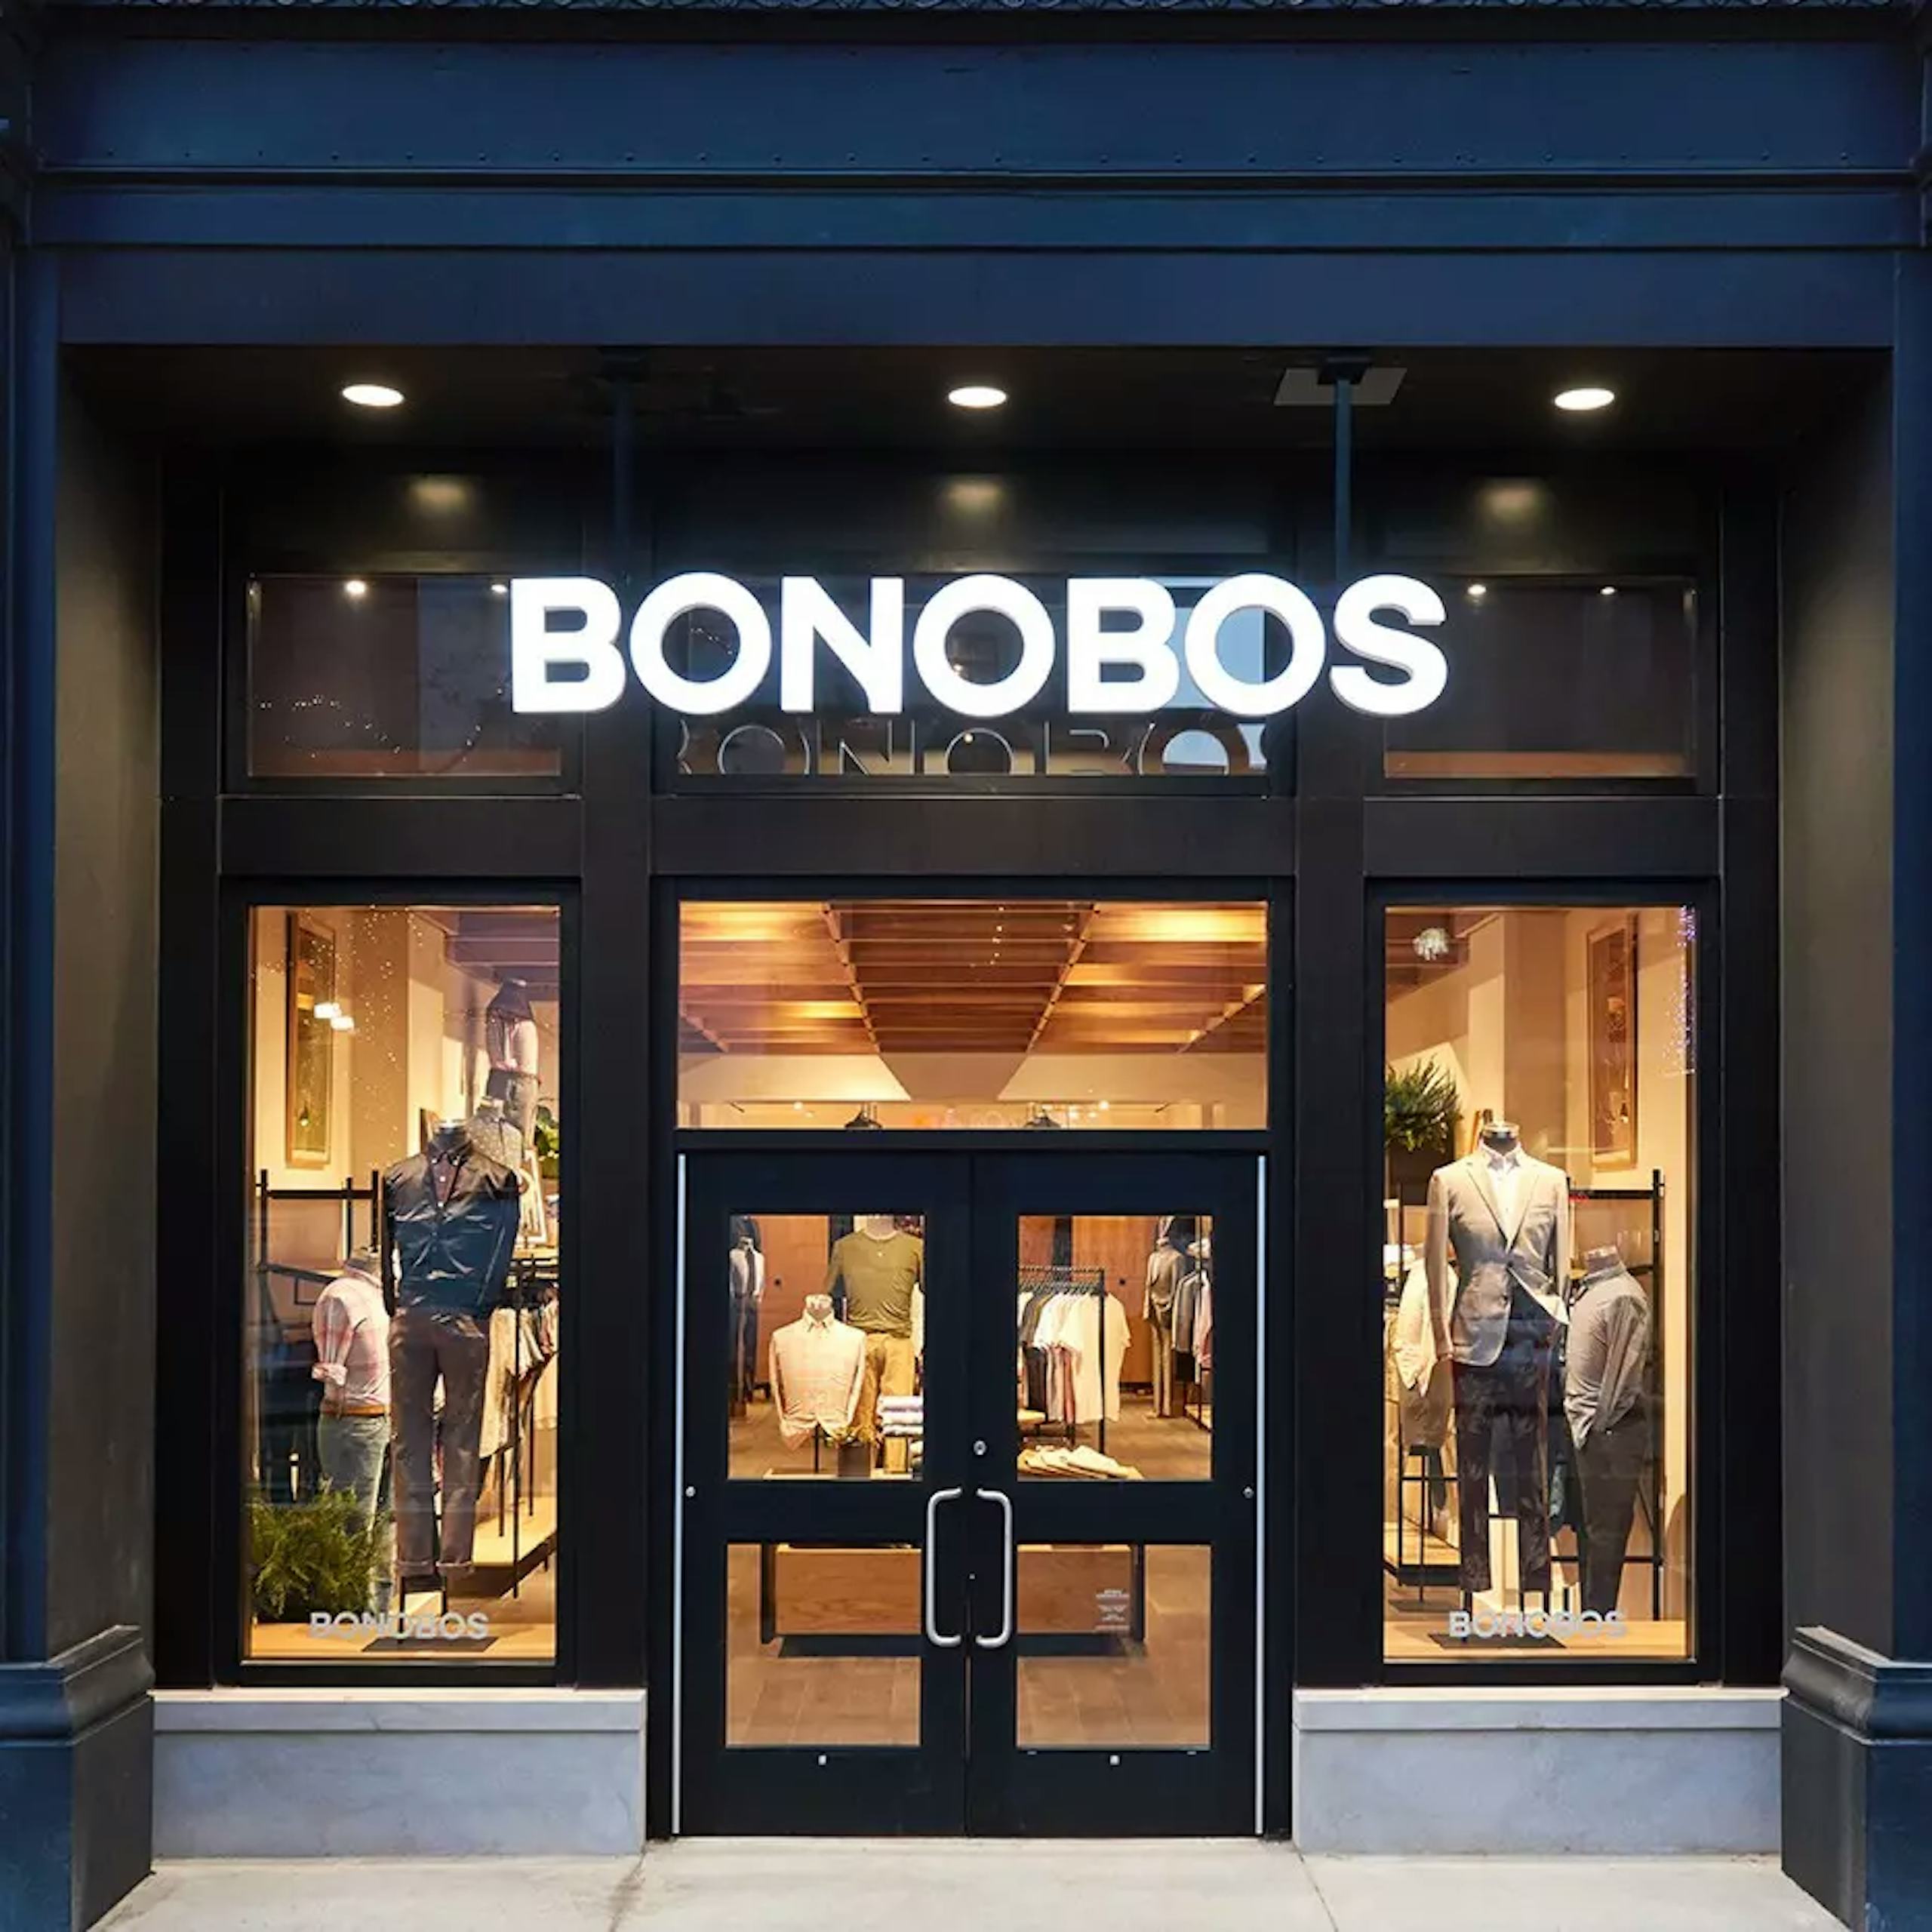 Image of Santana Row Bonobos storefront.